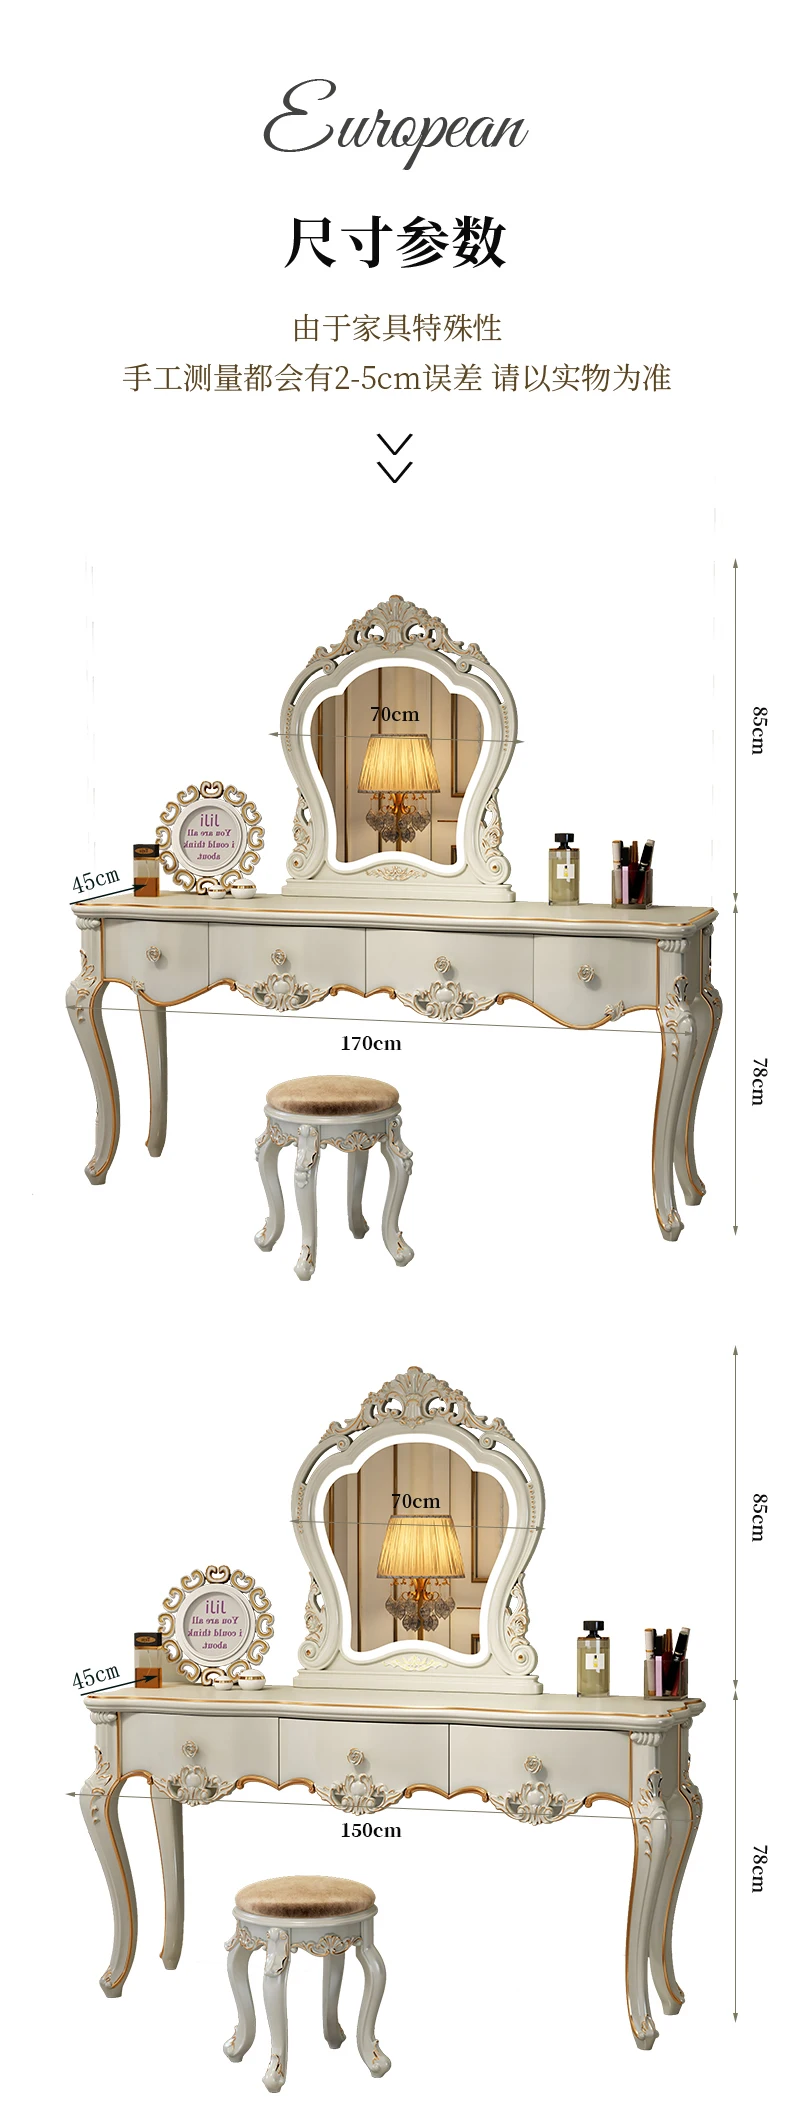 S K furniture - Beautiful Bedroom wardrobe furniture design 👆 | Facebook